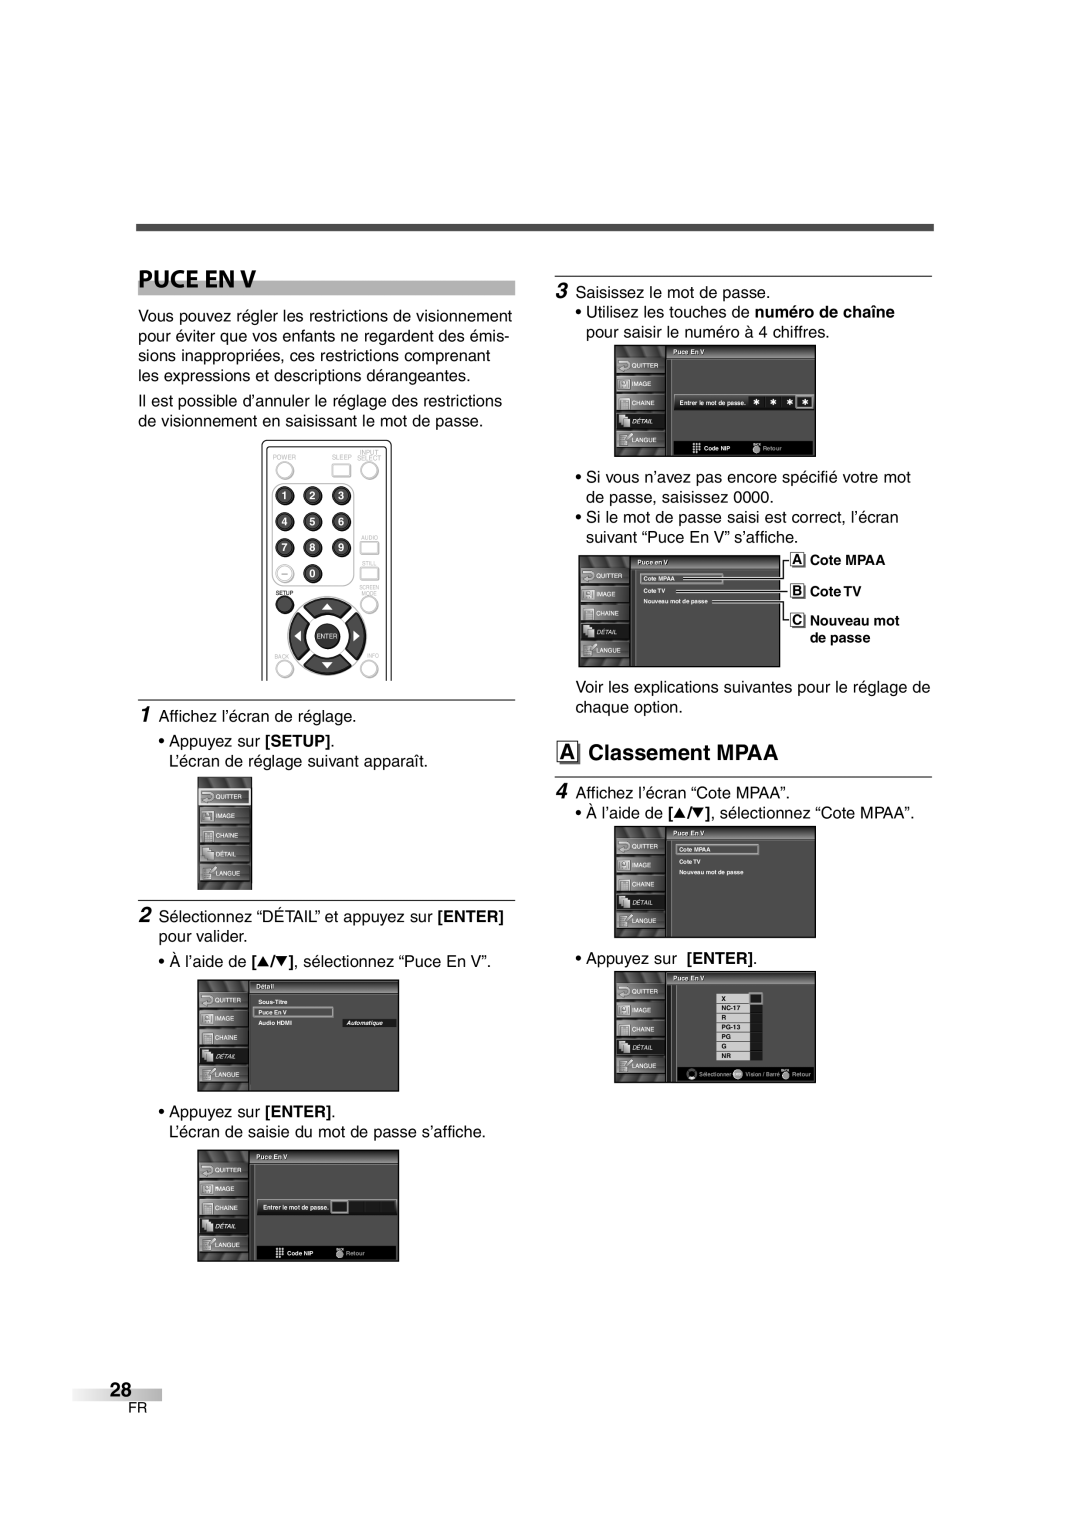 FUNAI CIWL3206 owner manual A Classement MPAA, suivant “Puce En V” s’affiche 